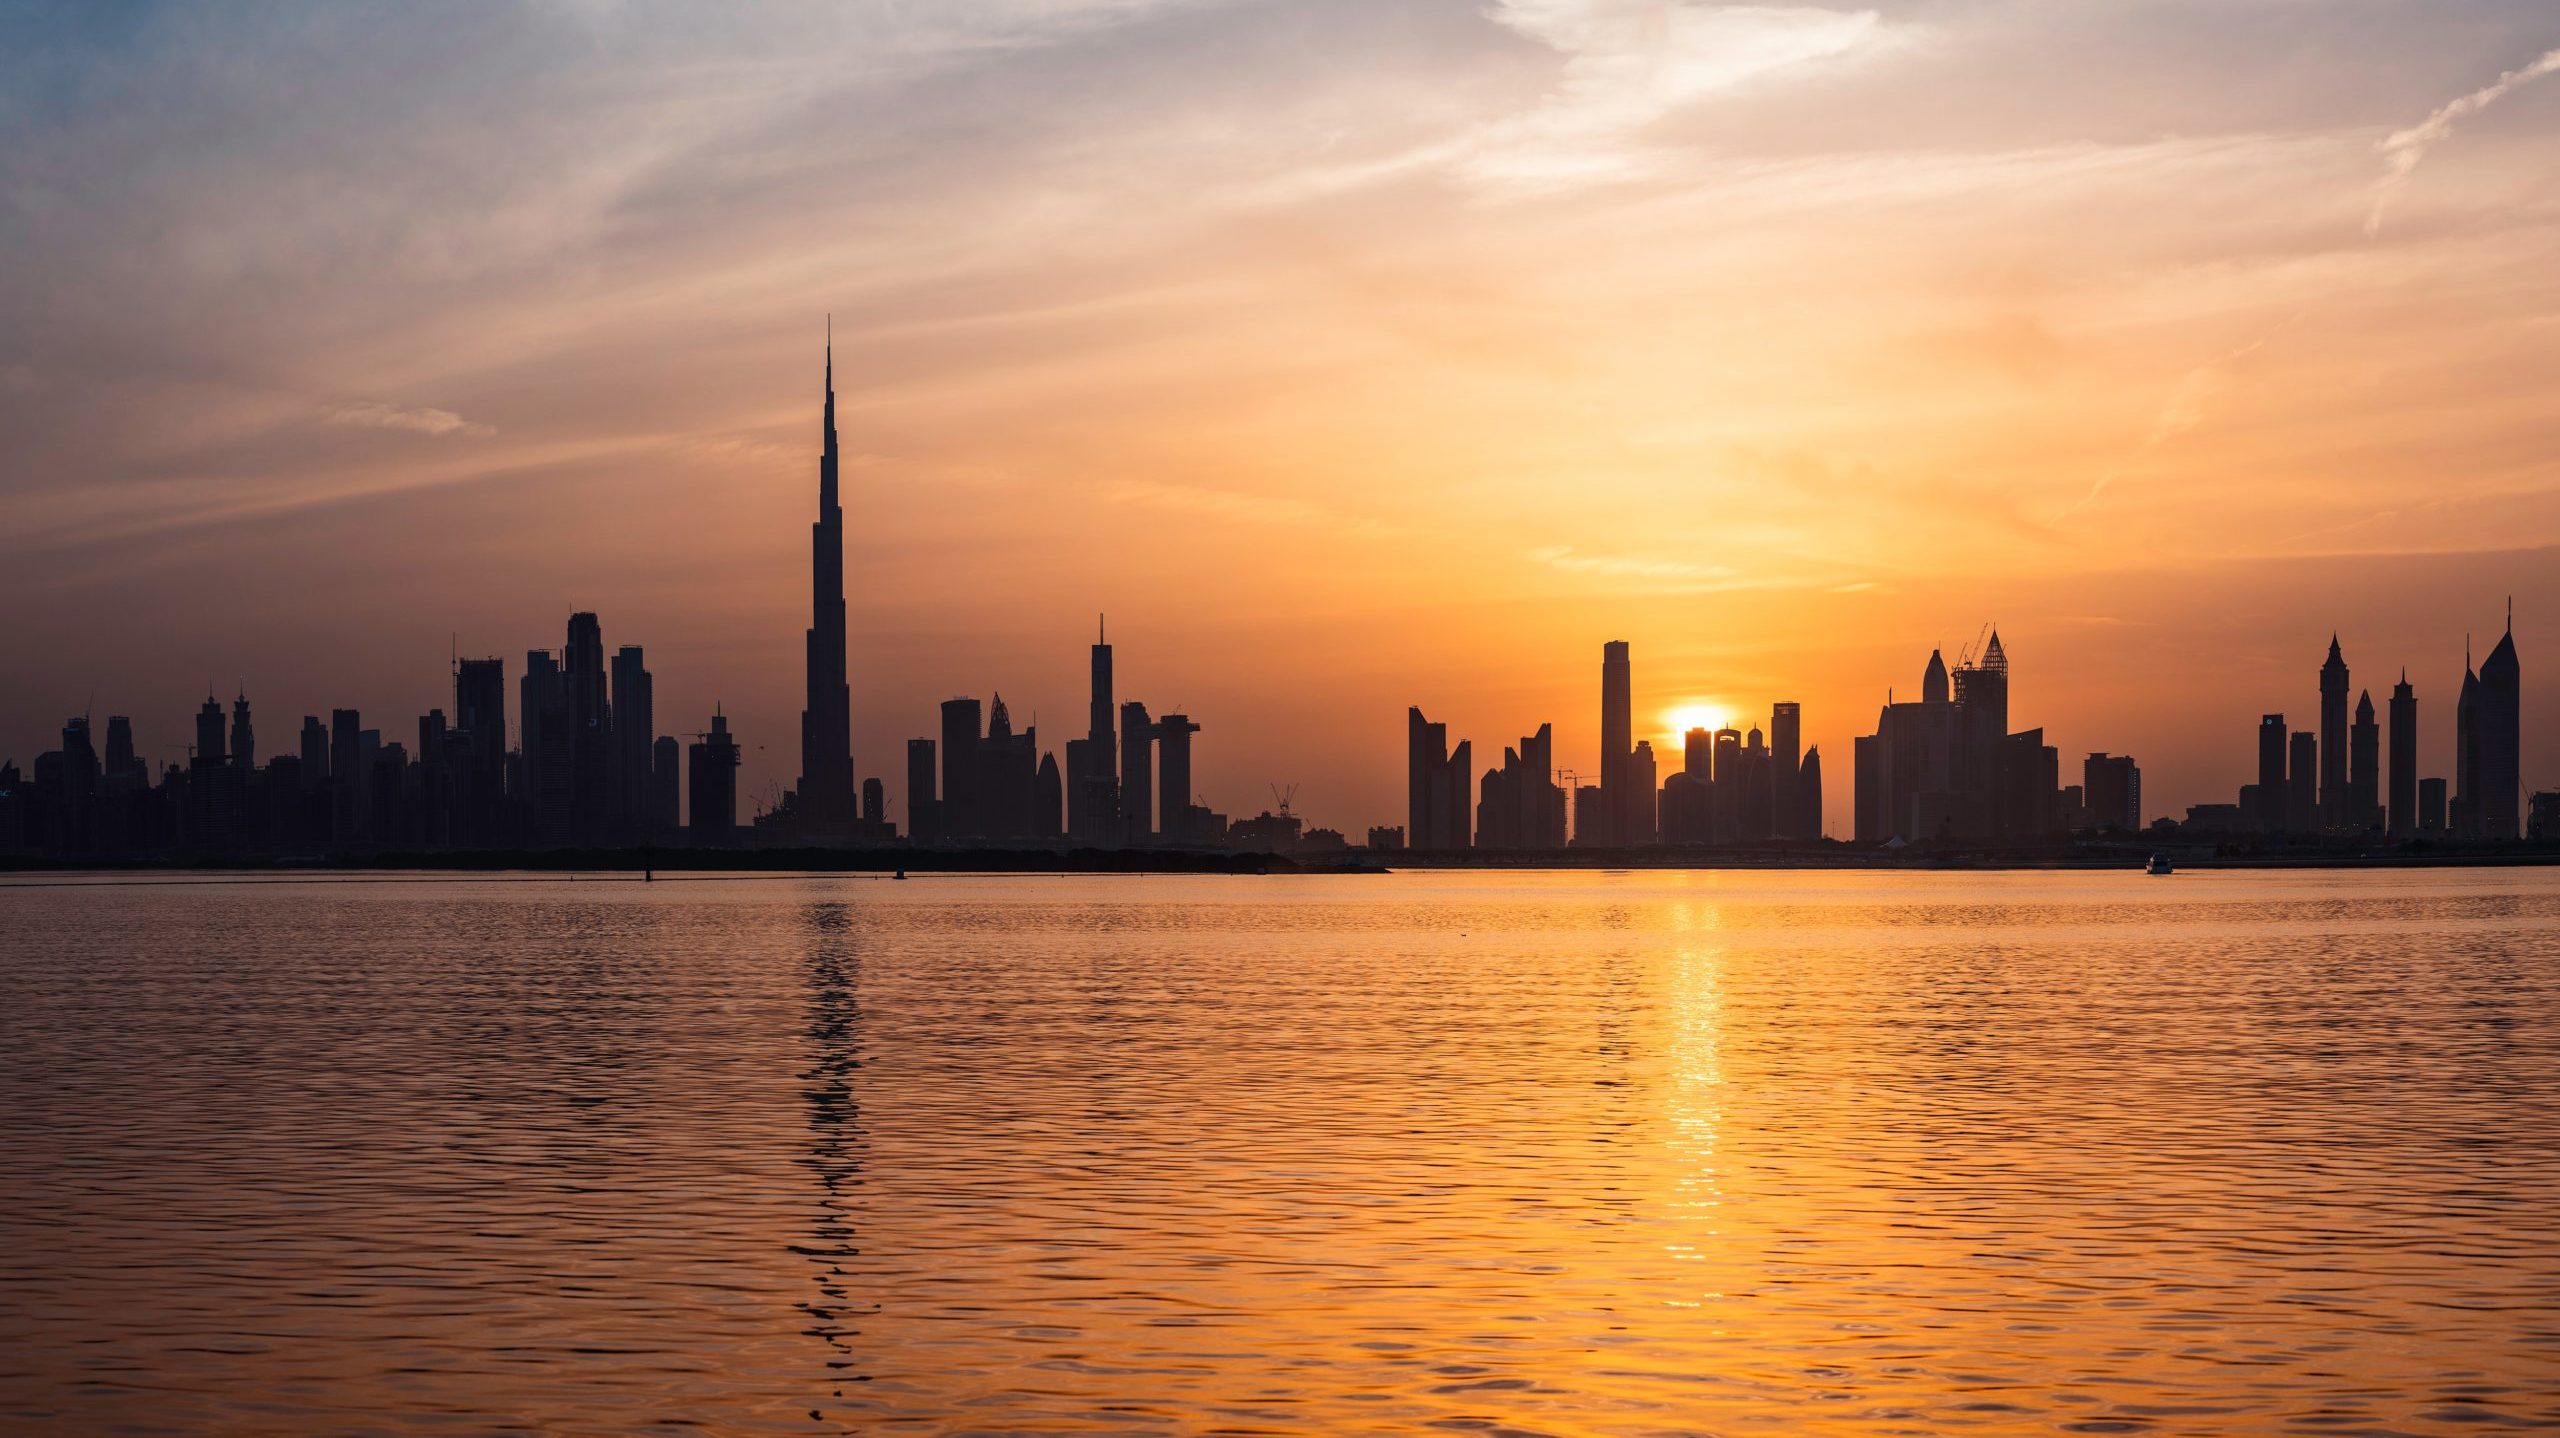 Tourism Revenue in UAE Tops $5 Billion This Year